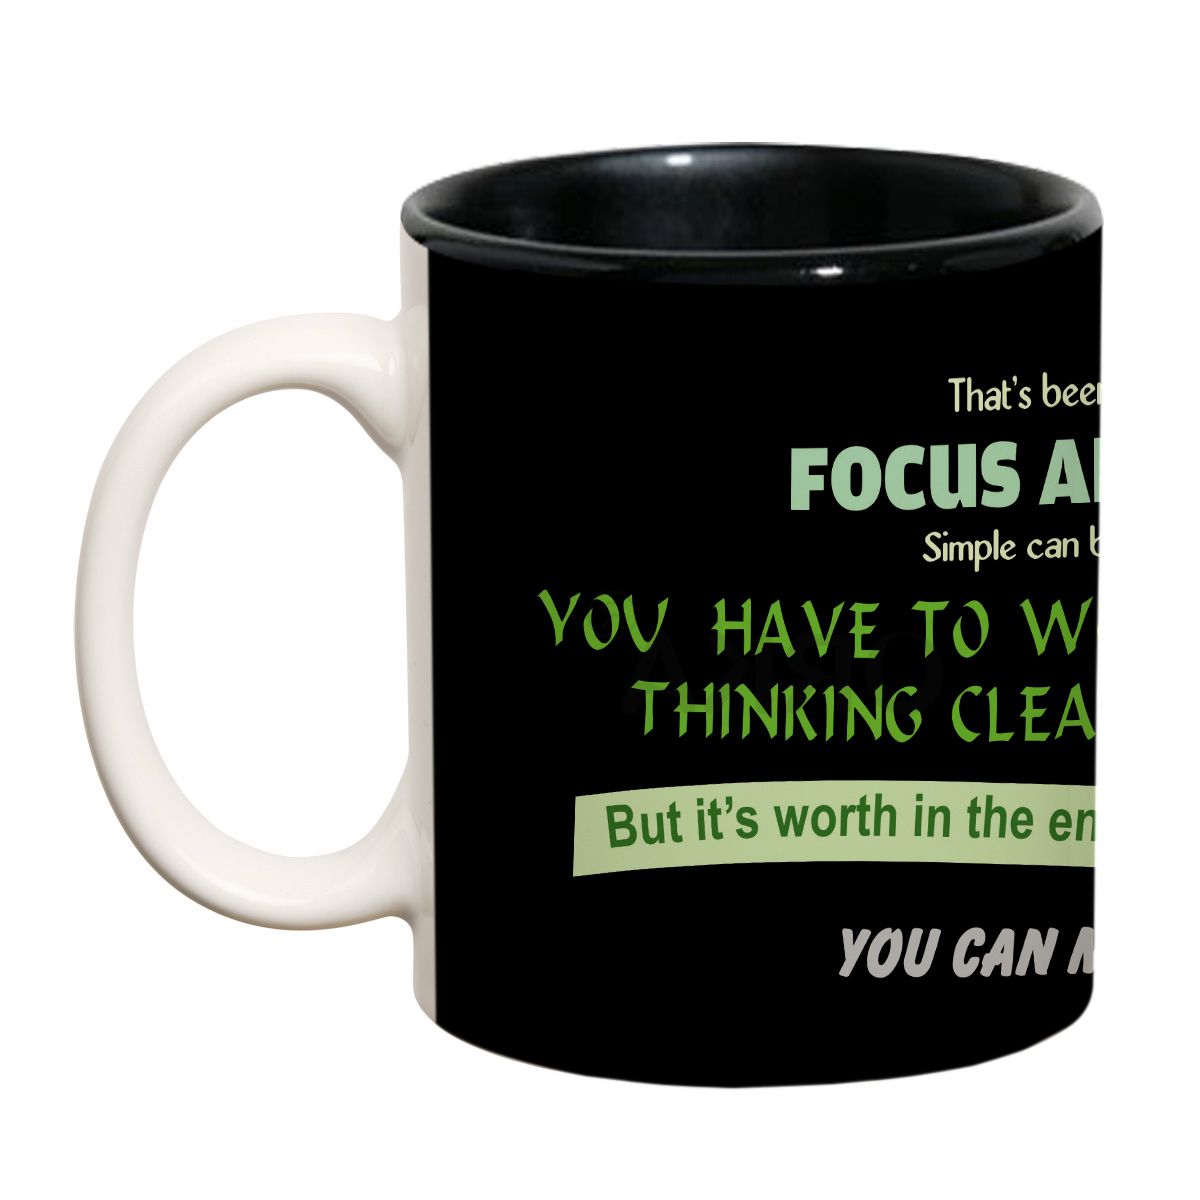 ORKA Coffee Mug Quotes Printed(Focus) Theme 11 Oz   